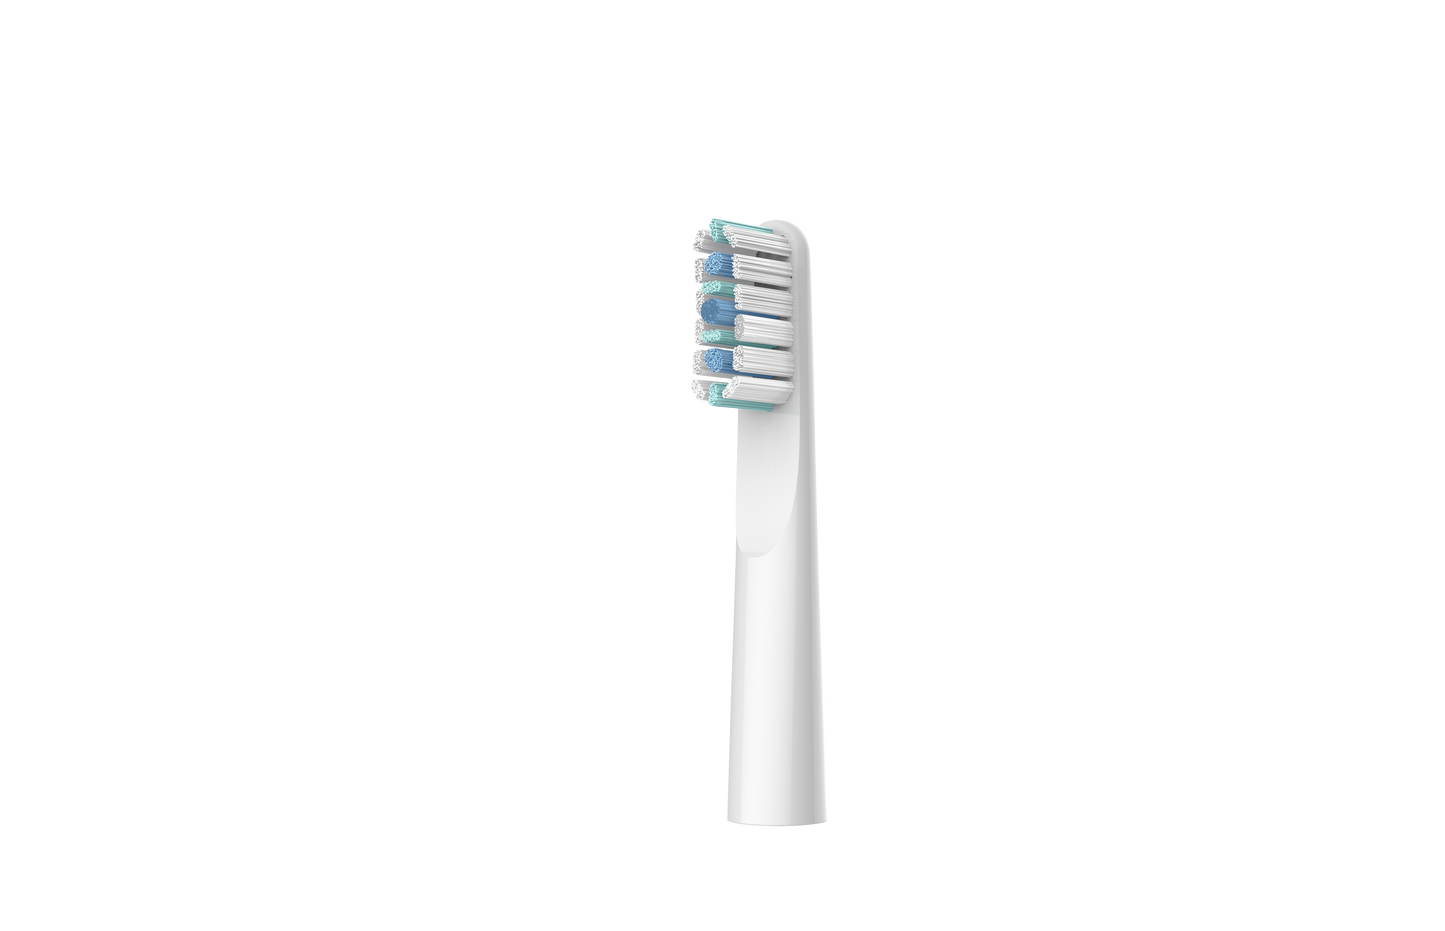 V8 Toothbrush Heads - Pack of 3